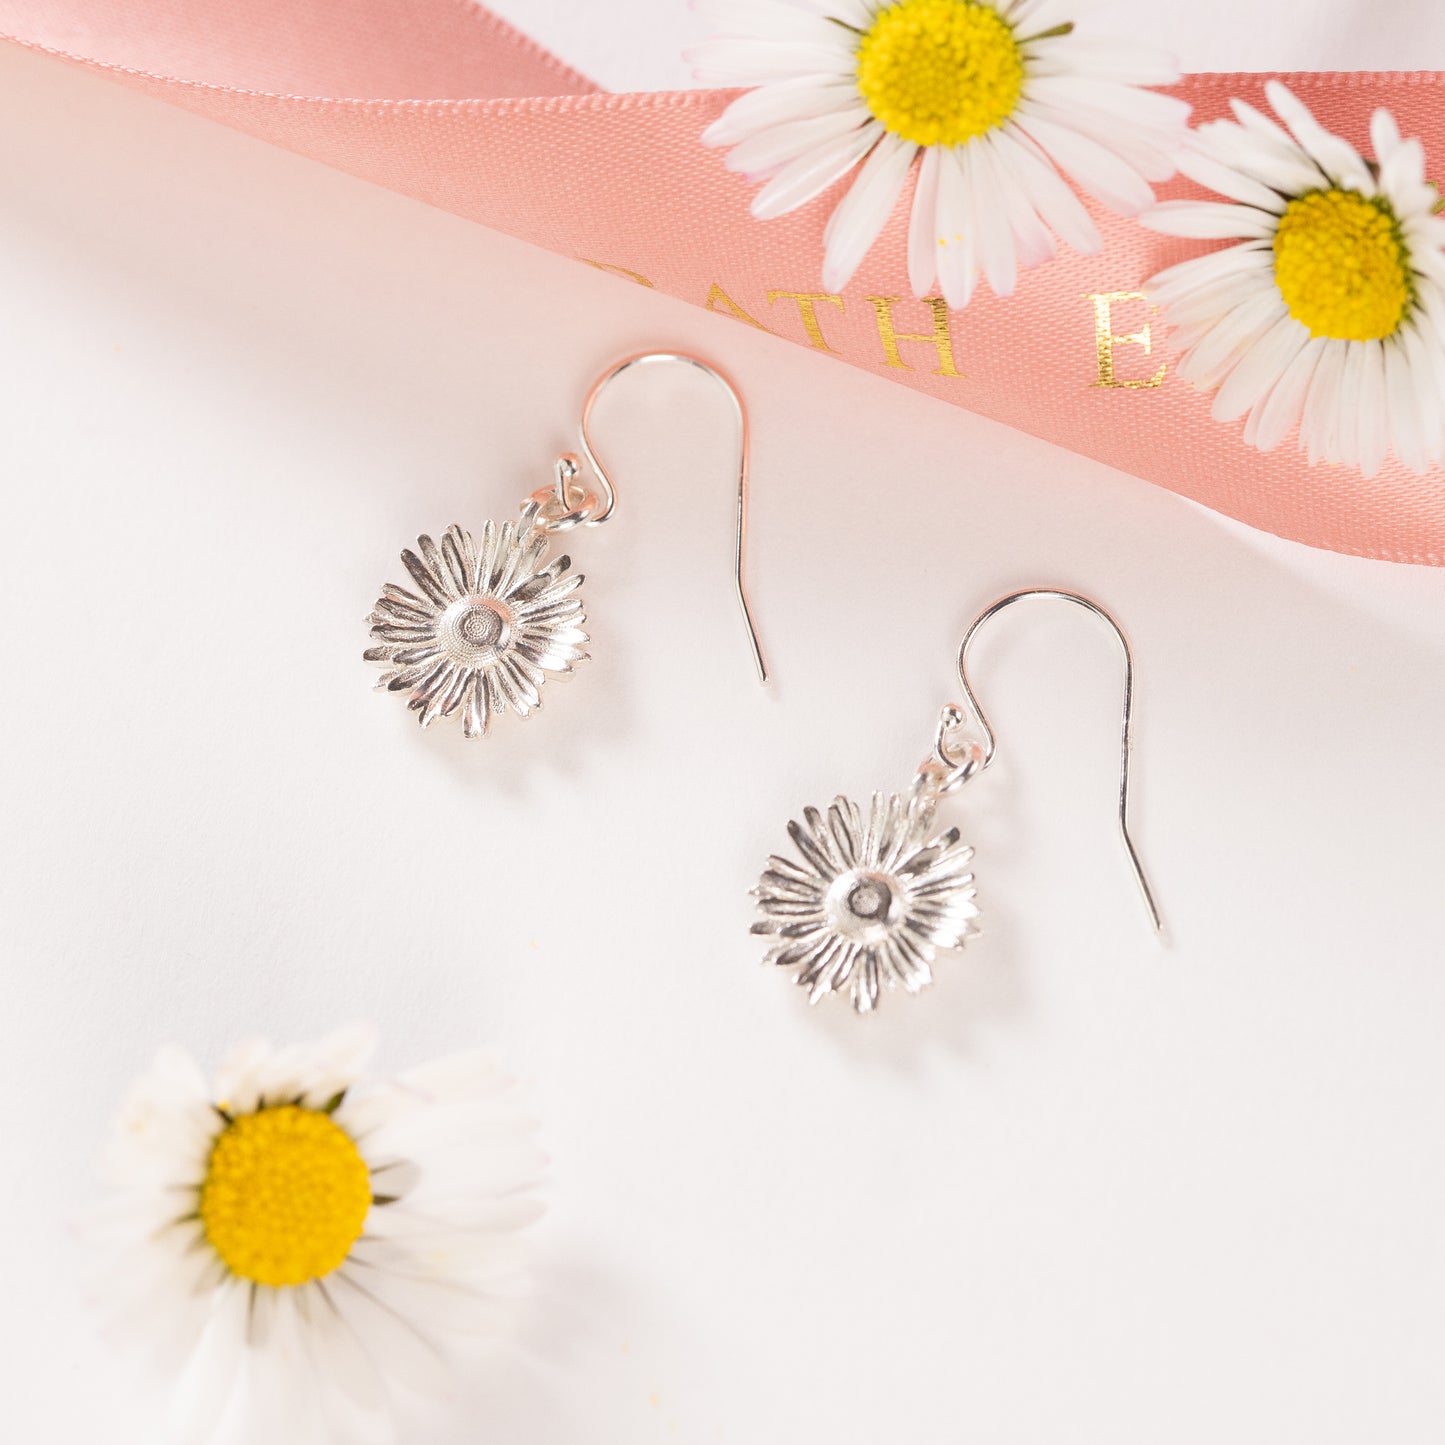 April Birth Flower Earrings - Daisy - Silver